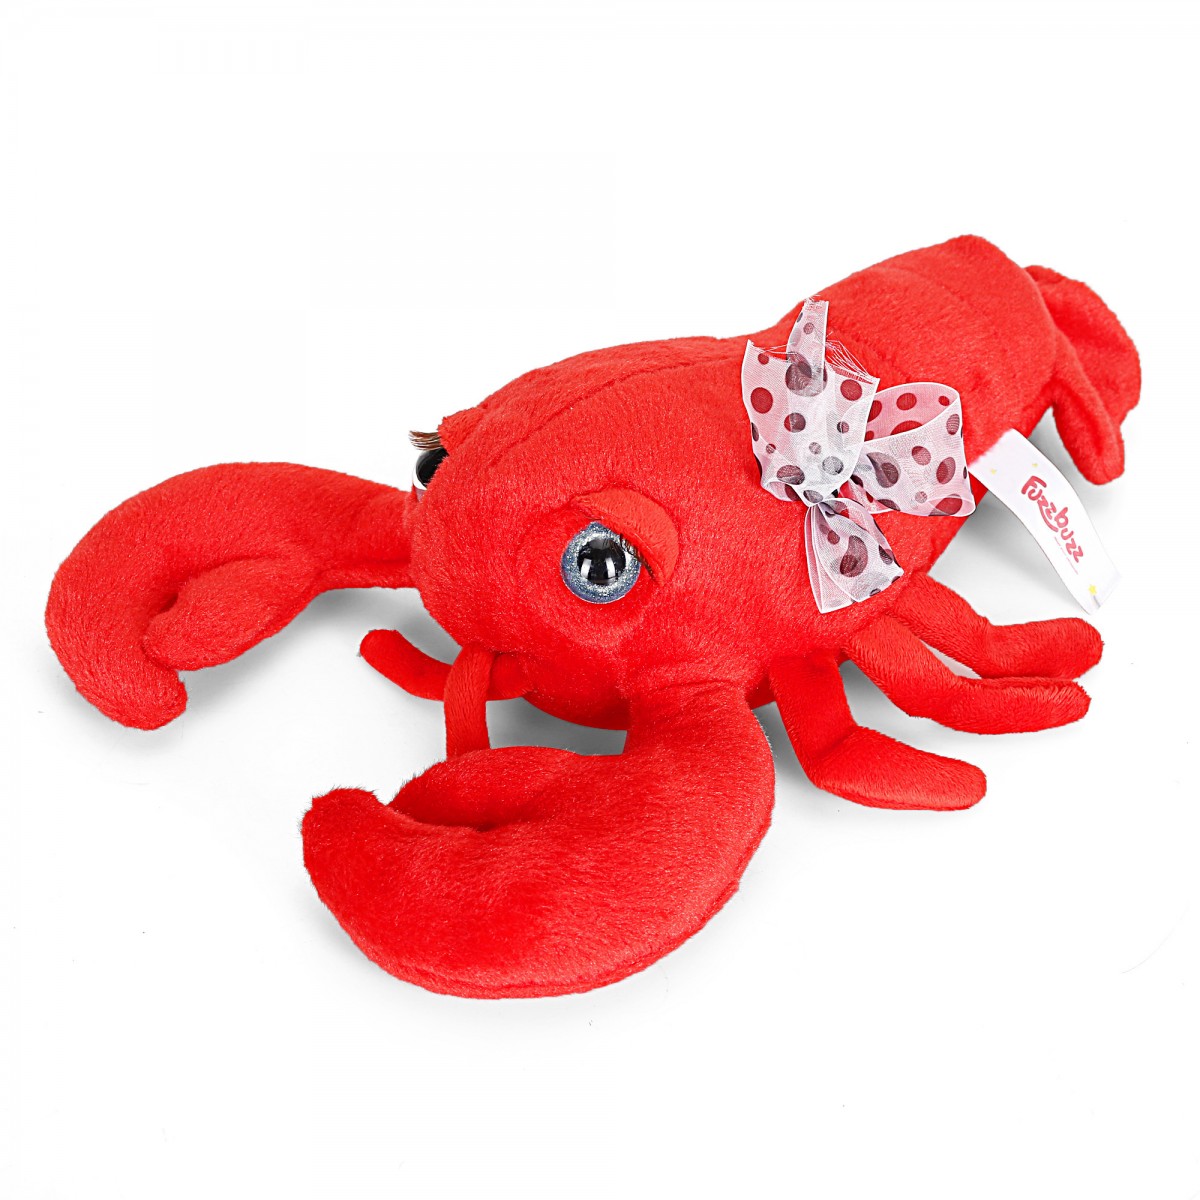 Fuzzbuzz Lobster, Soft Loys for Kids, 30cm, Red